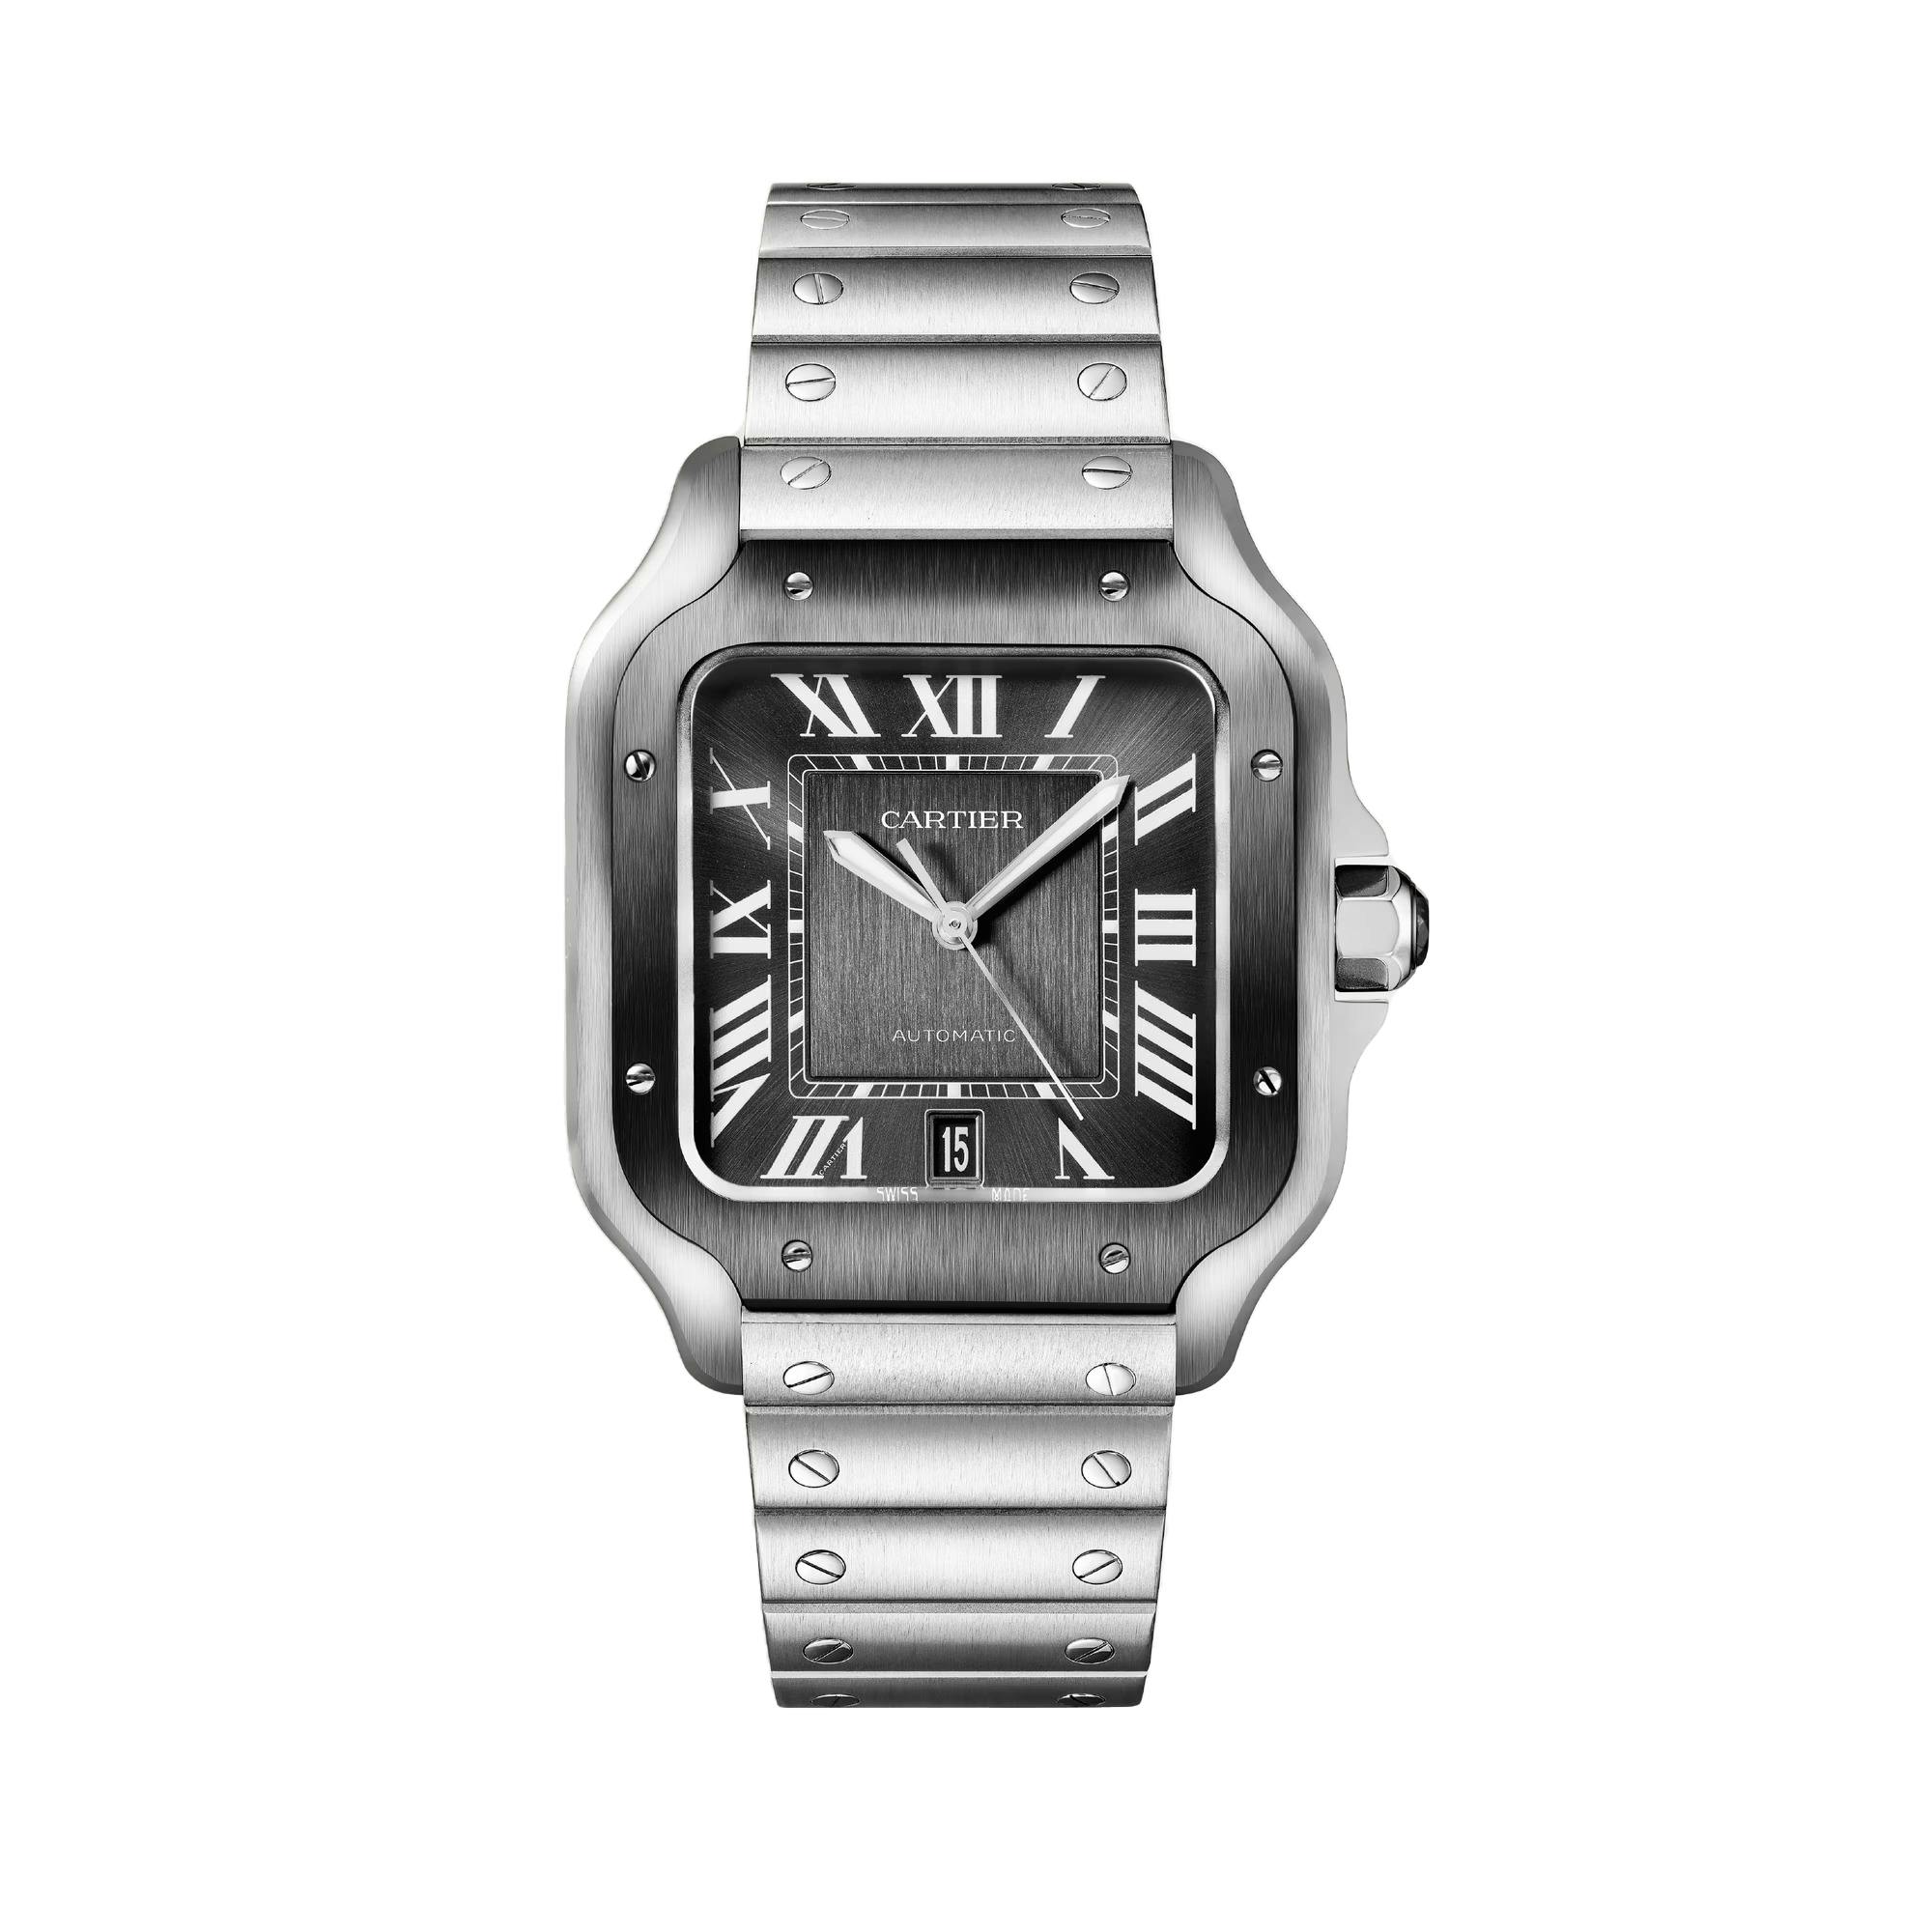 Santos de Cartier Watch with Gray Dial, large model